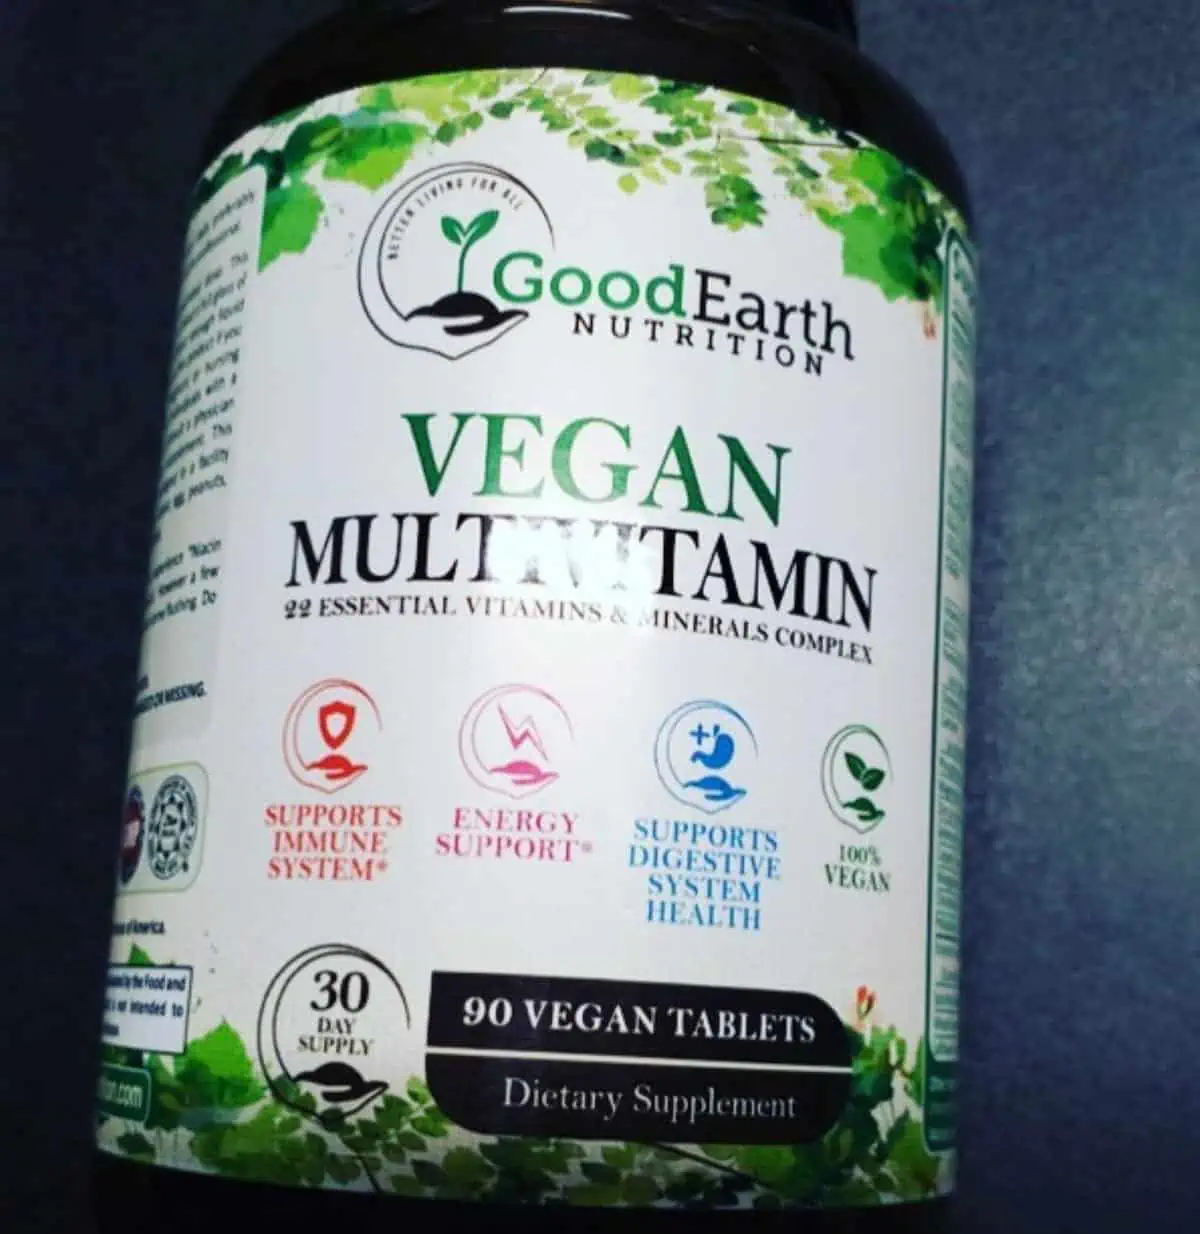 A bottle of Good Earth nutrition brand vegan multivitamins.